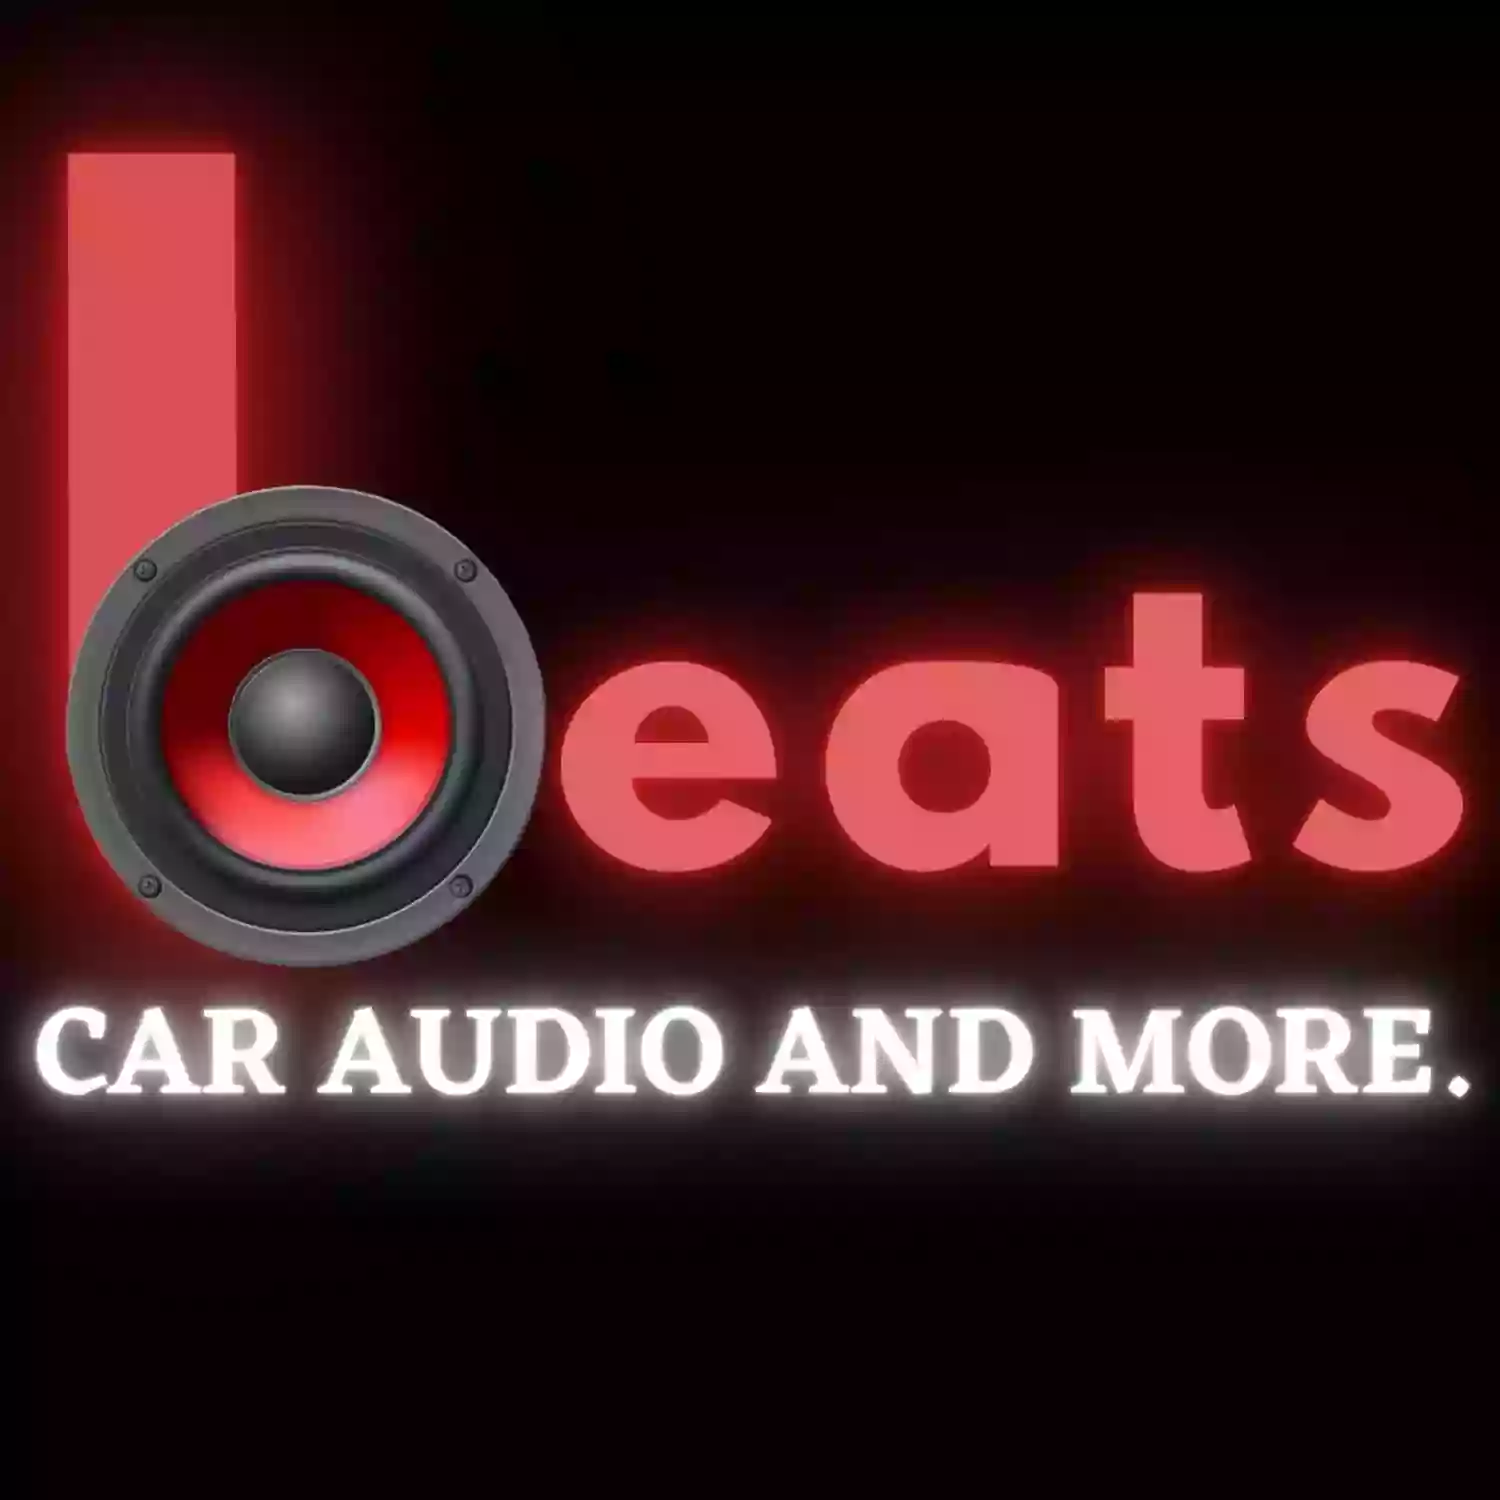 Beats Car Audio